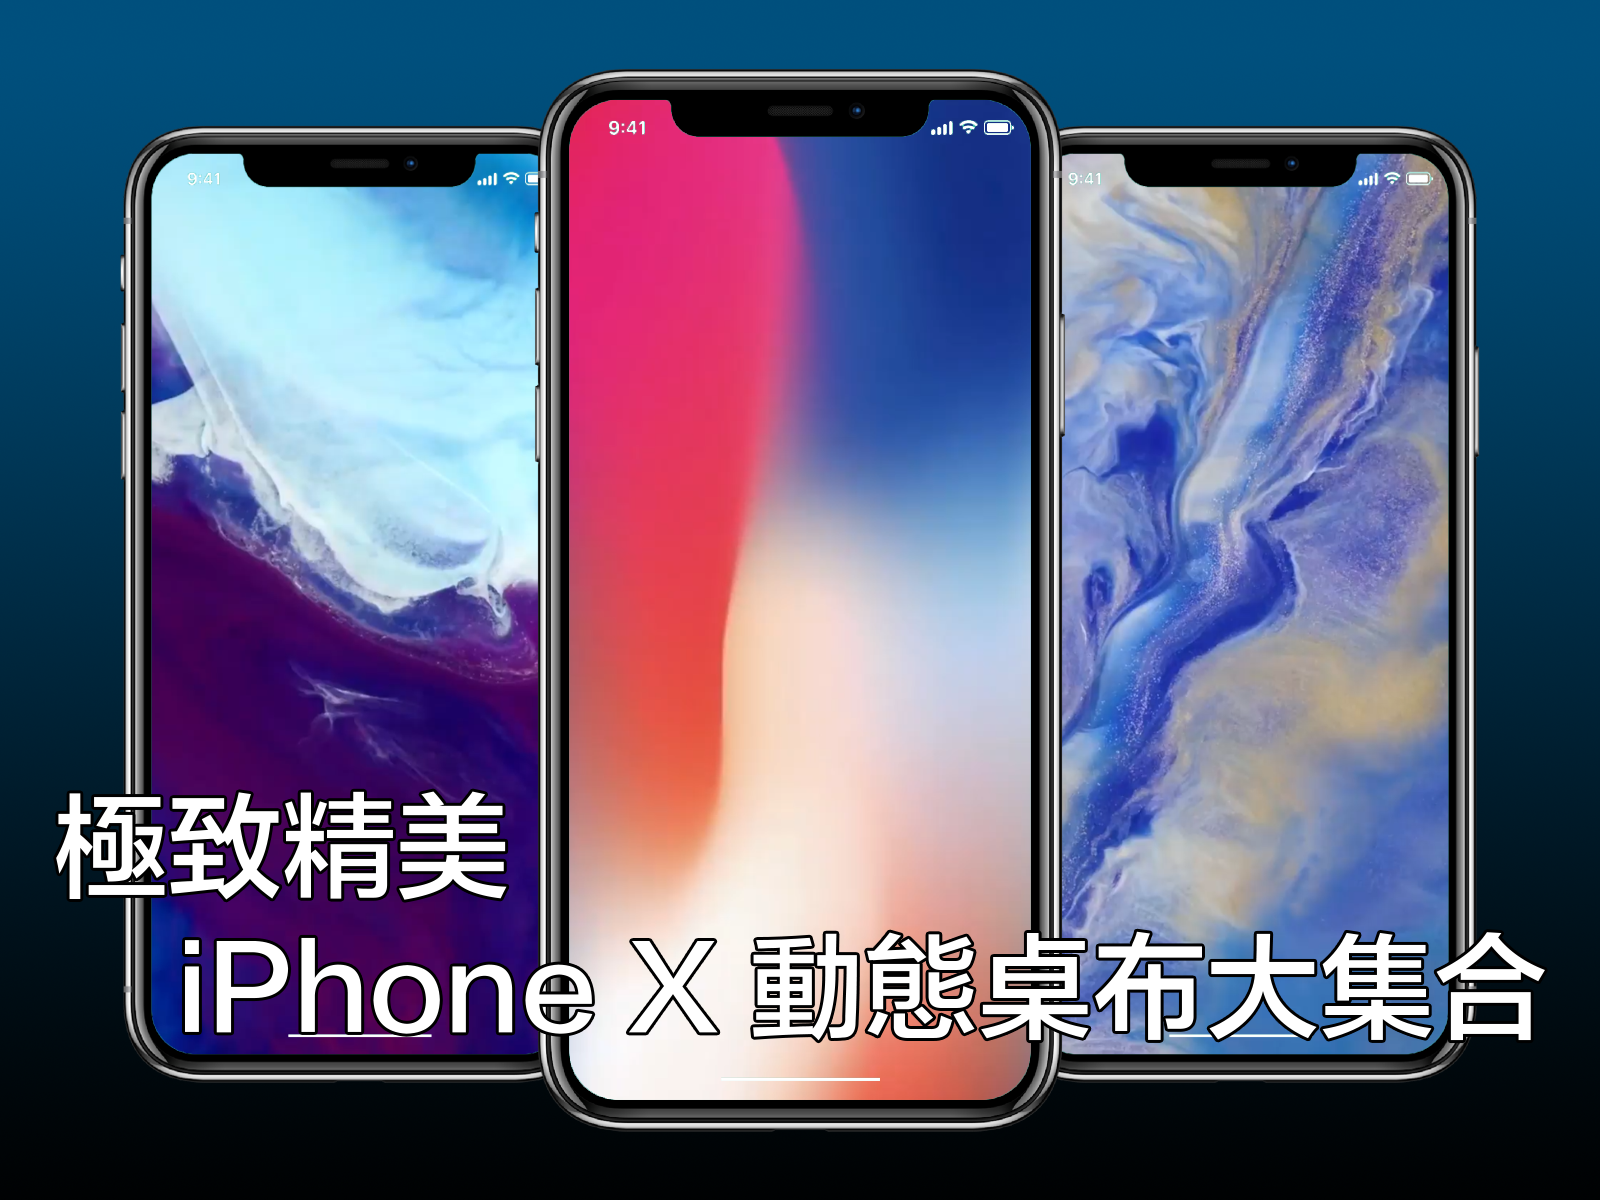 Iphone X 宣傳風格 動態 桌布大集合 流動日報